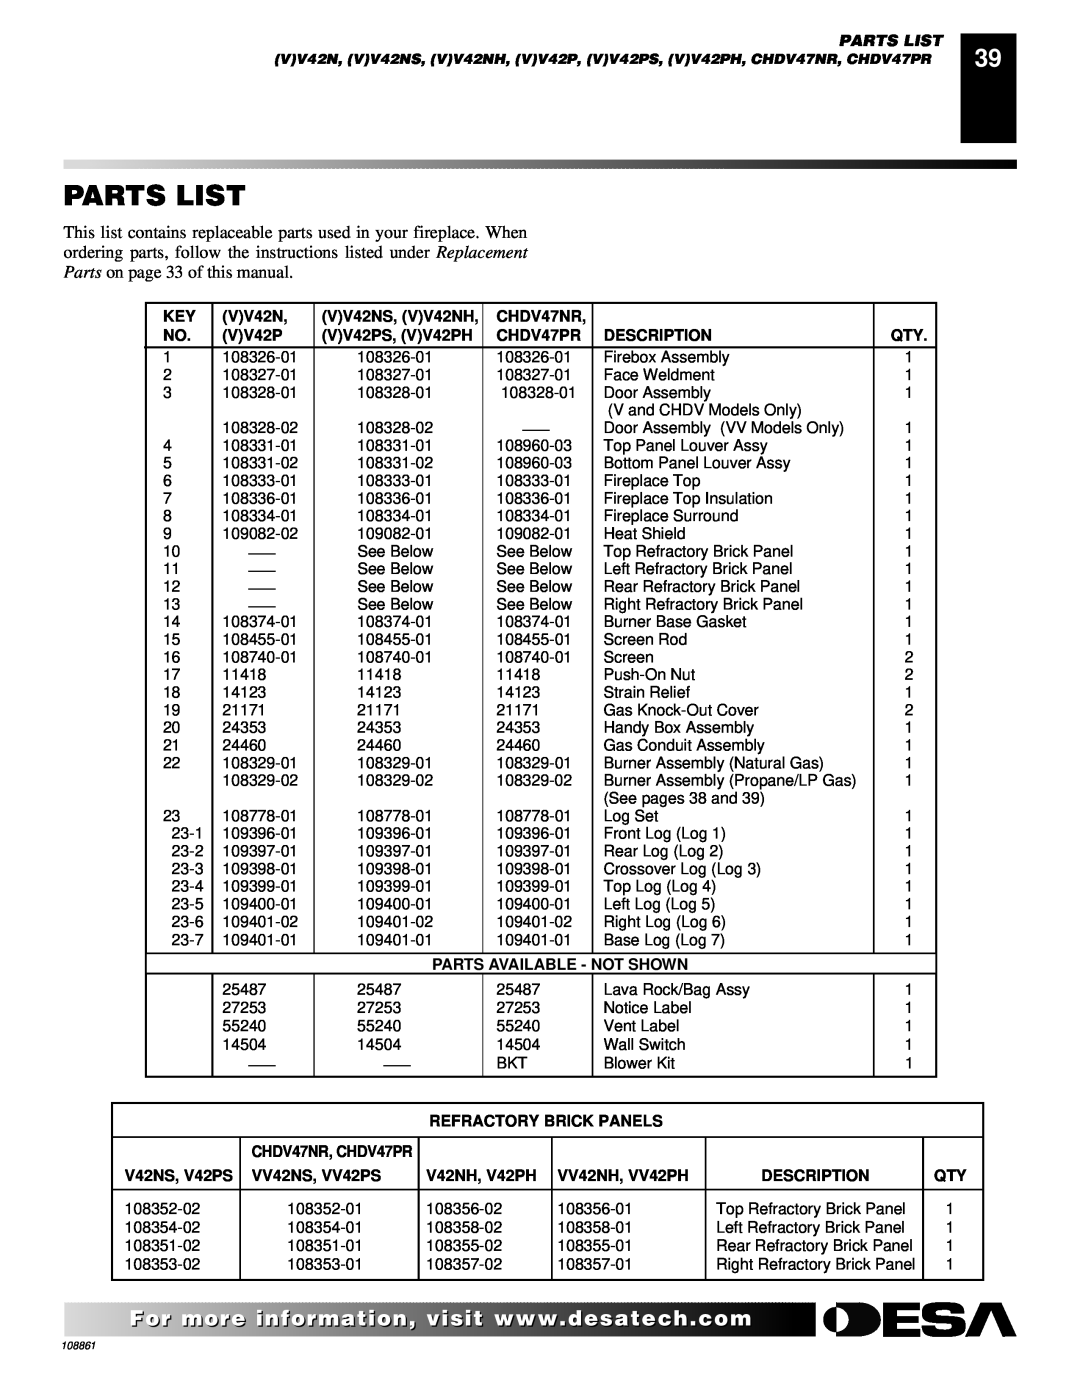 Desa (V)V36N, CHDV47NR, CHDV47PR installation manual Parts List, VV42N 